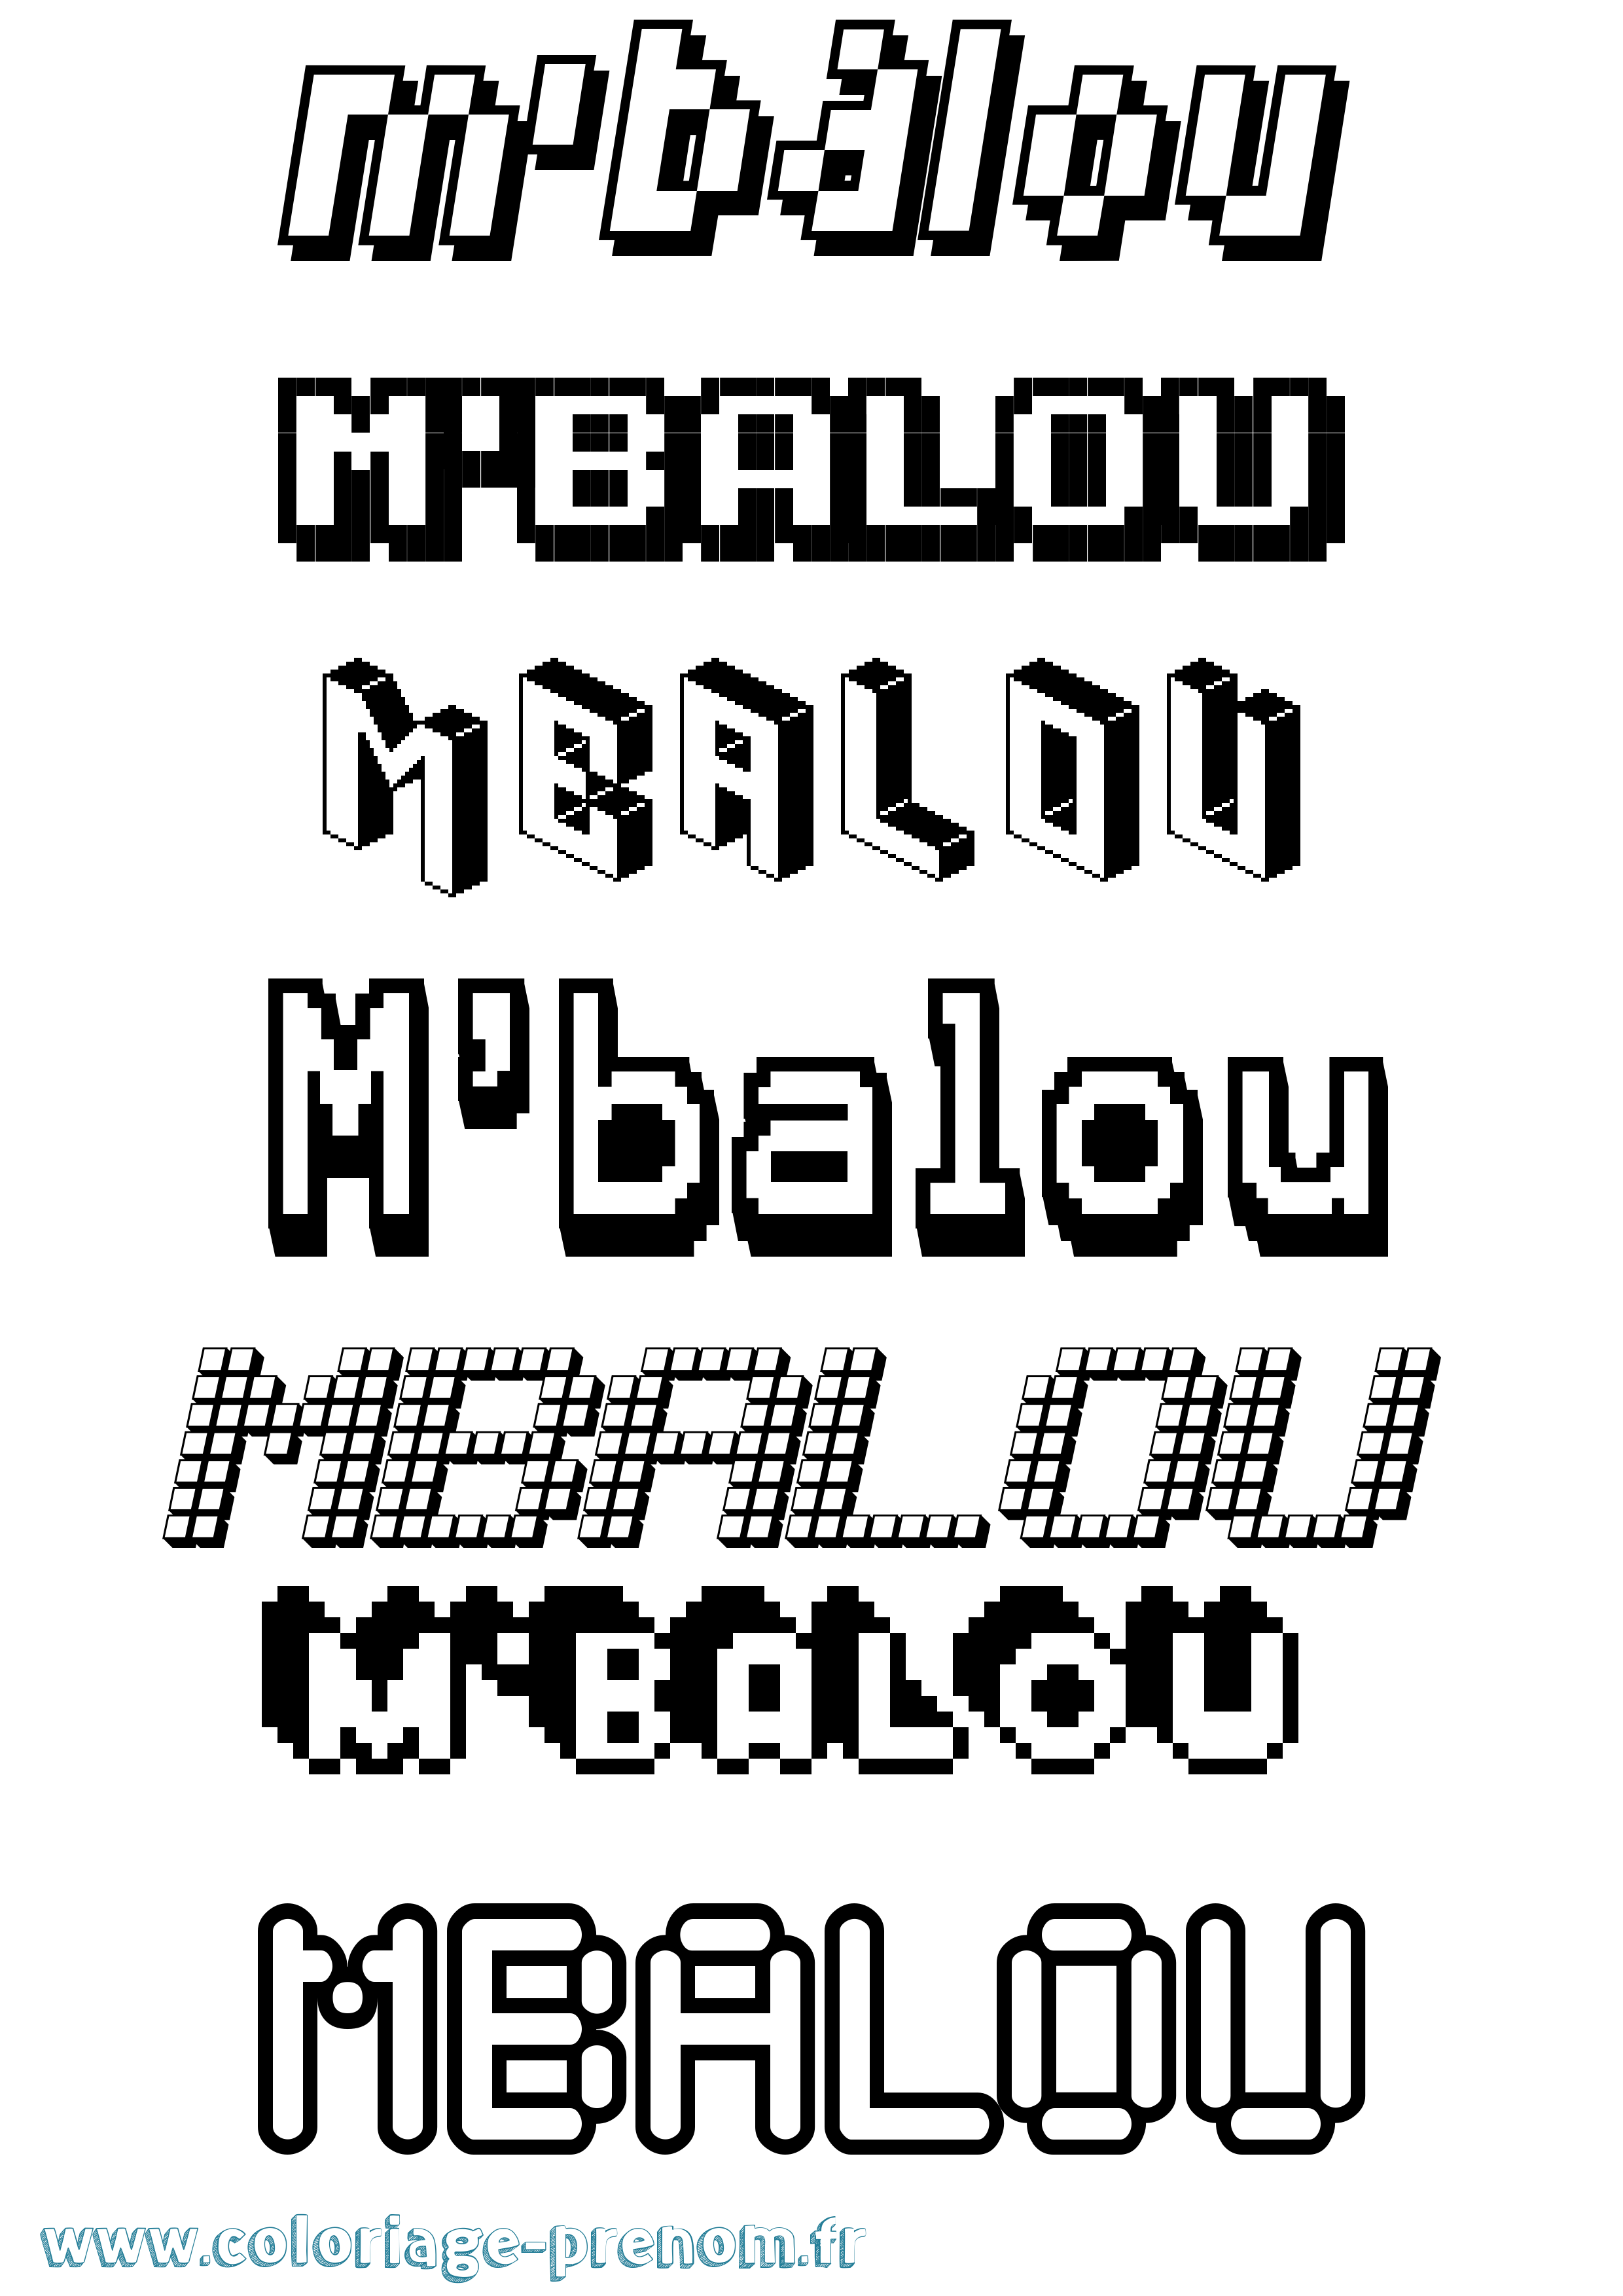 Coloriage prénom M'Balou Pixel